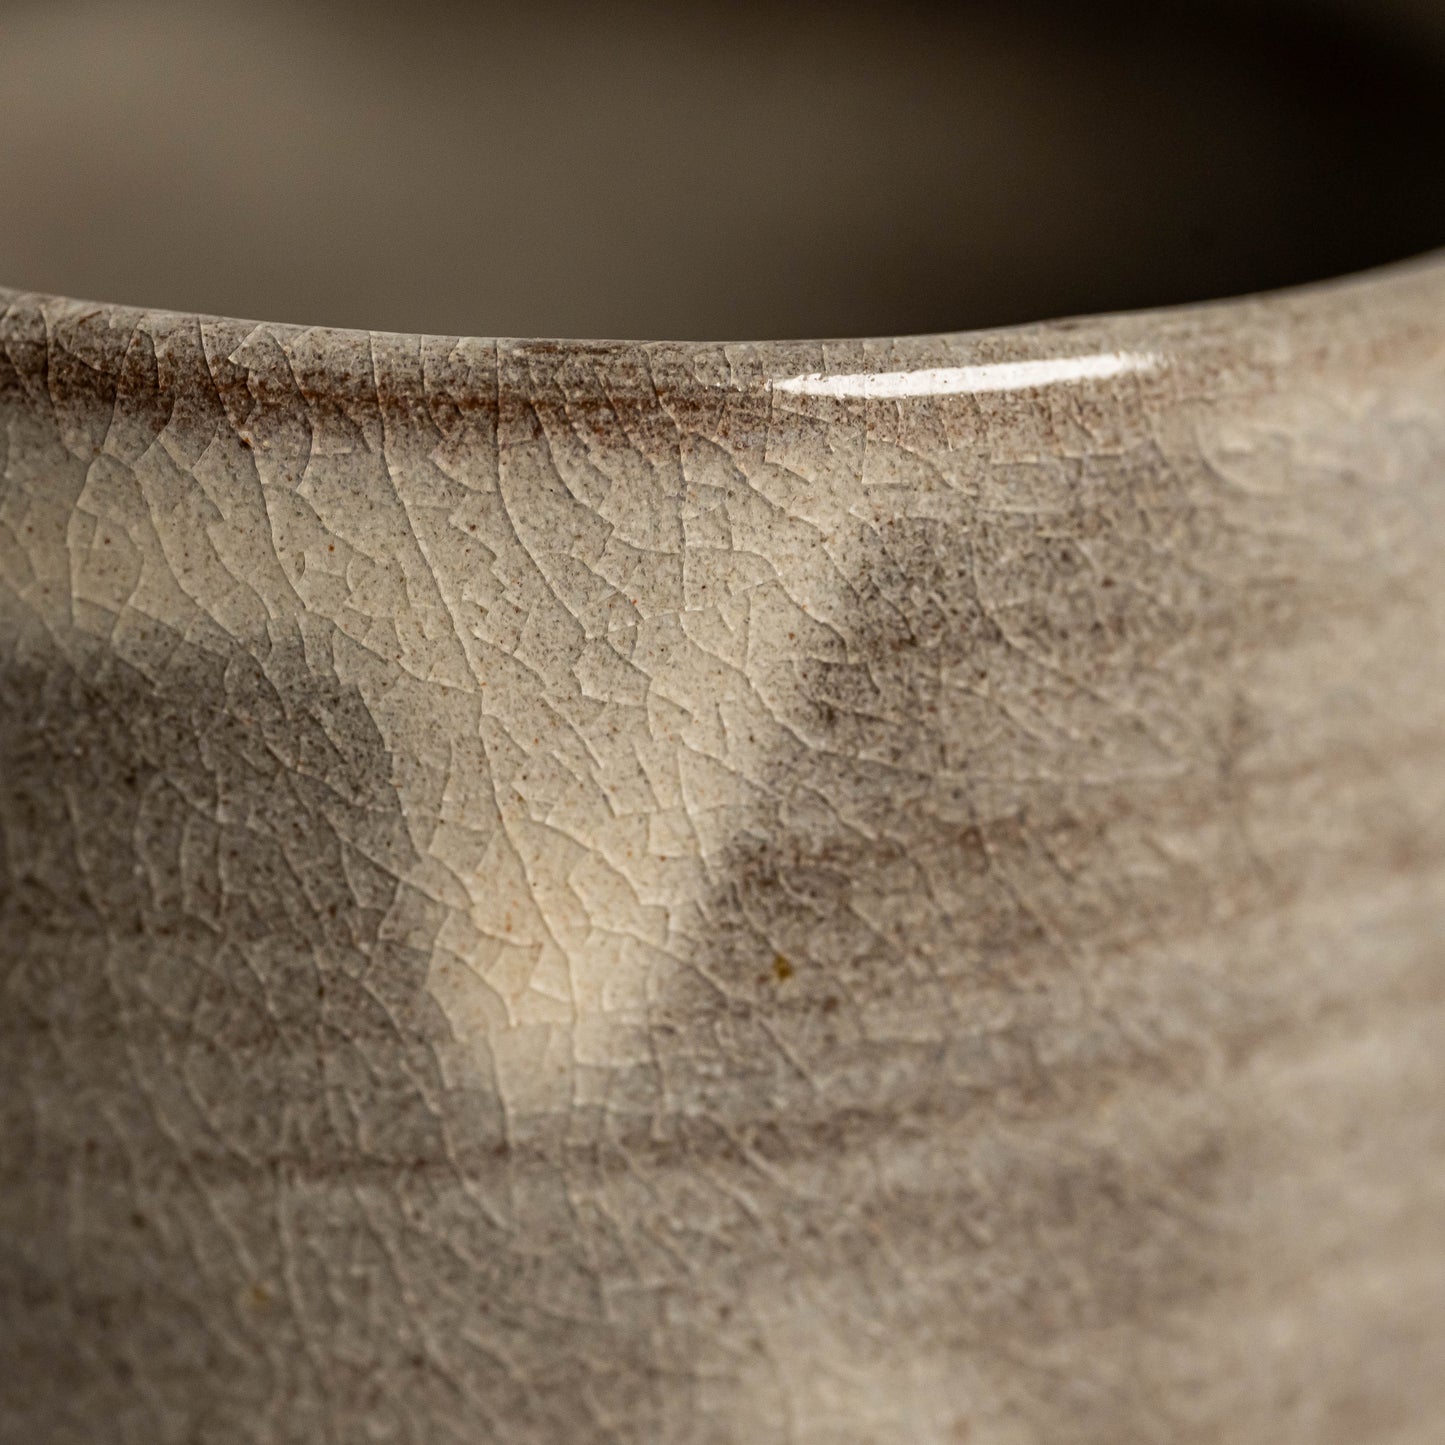 A close up of a brown Hagi yaki teacup 